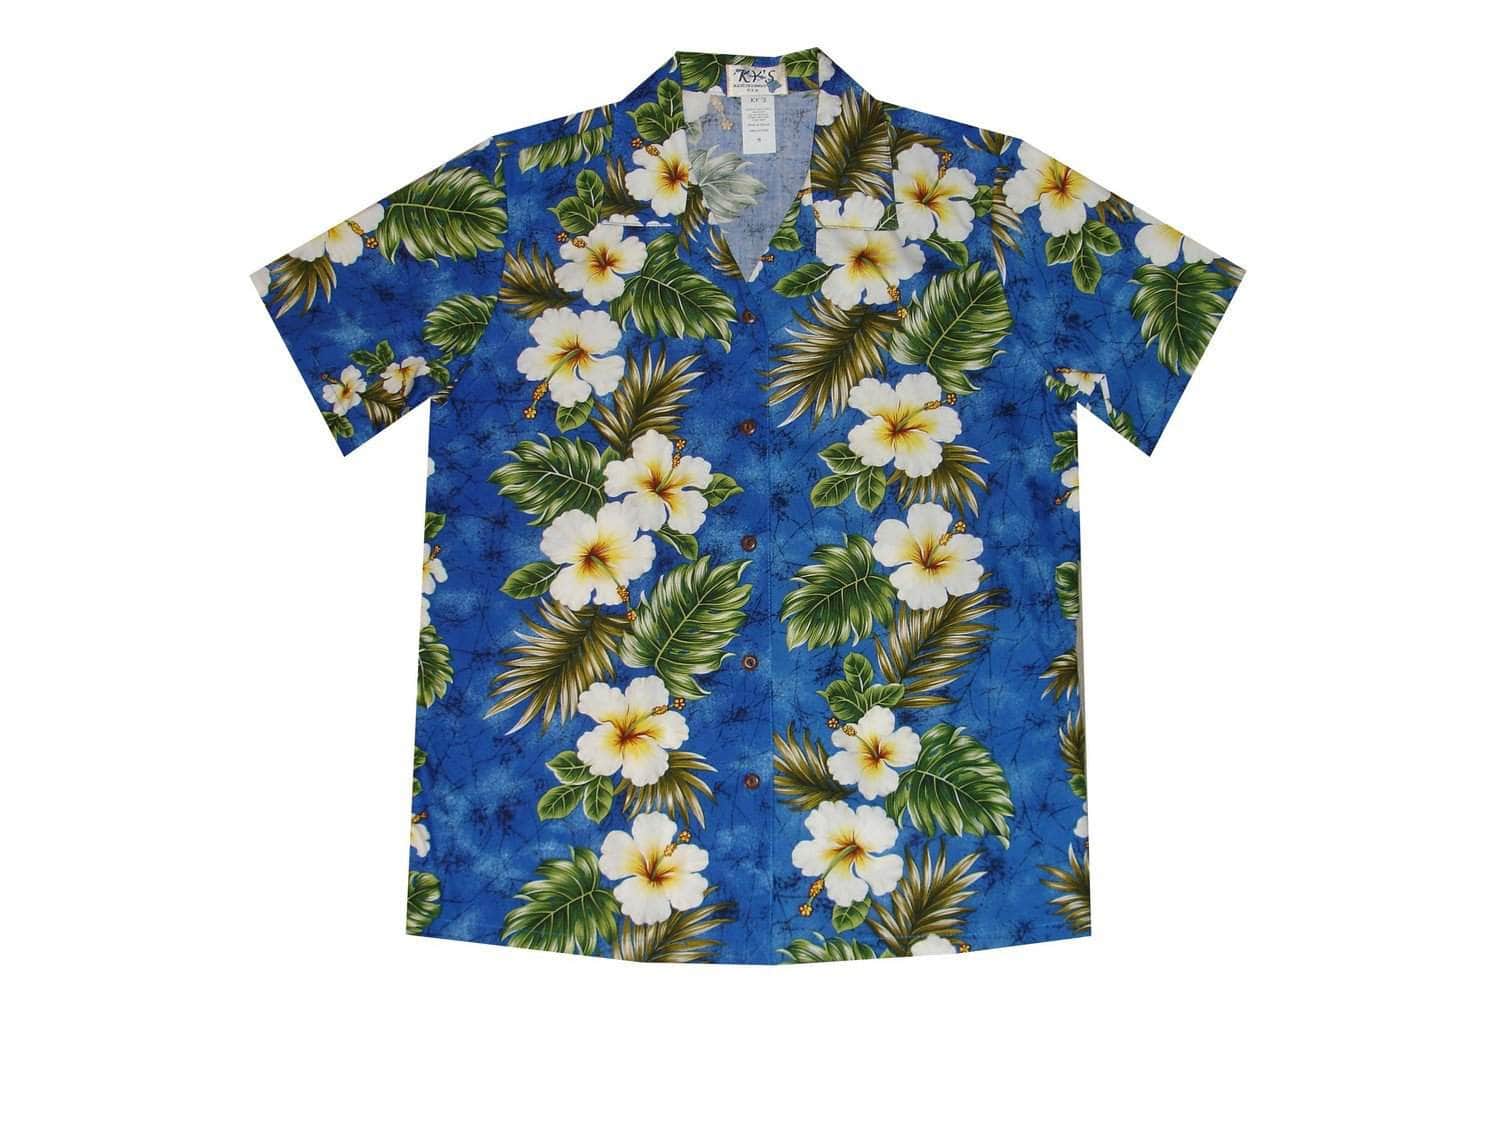 Tuislay Oversized Hawaiian Hibiscus Flower Shirts for Women